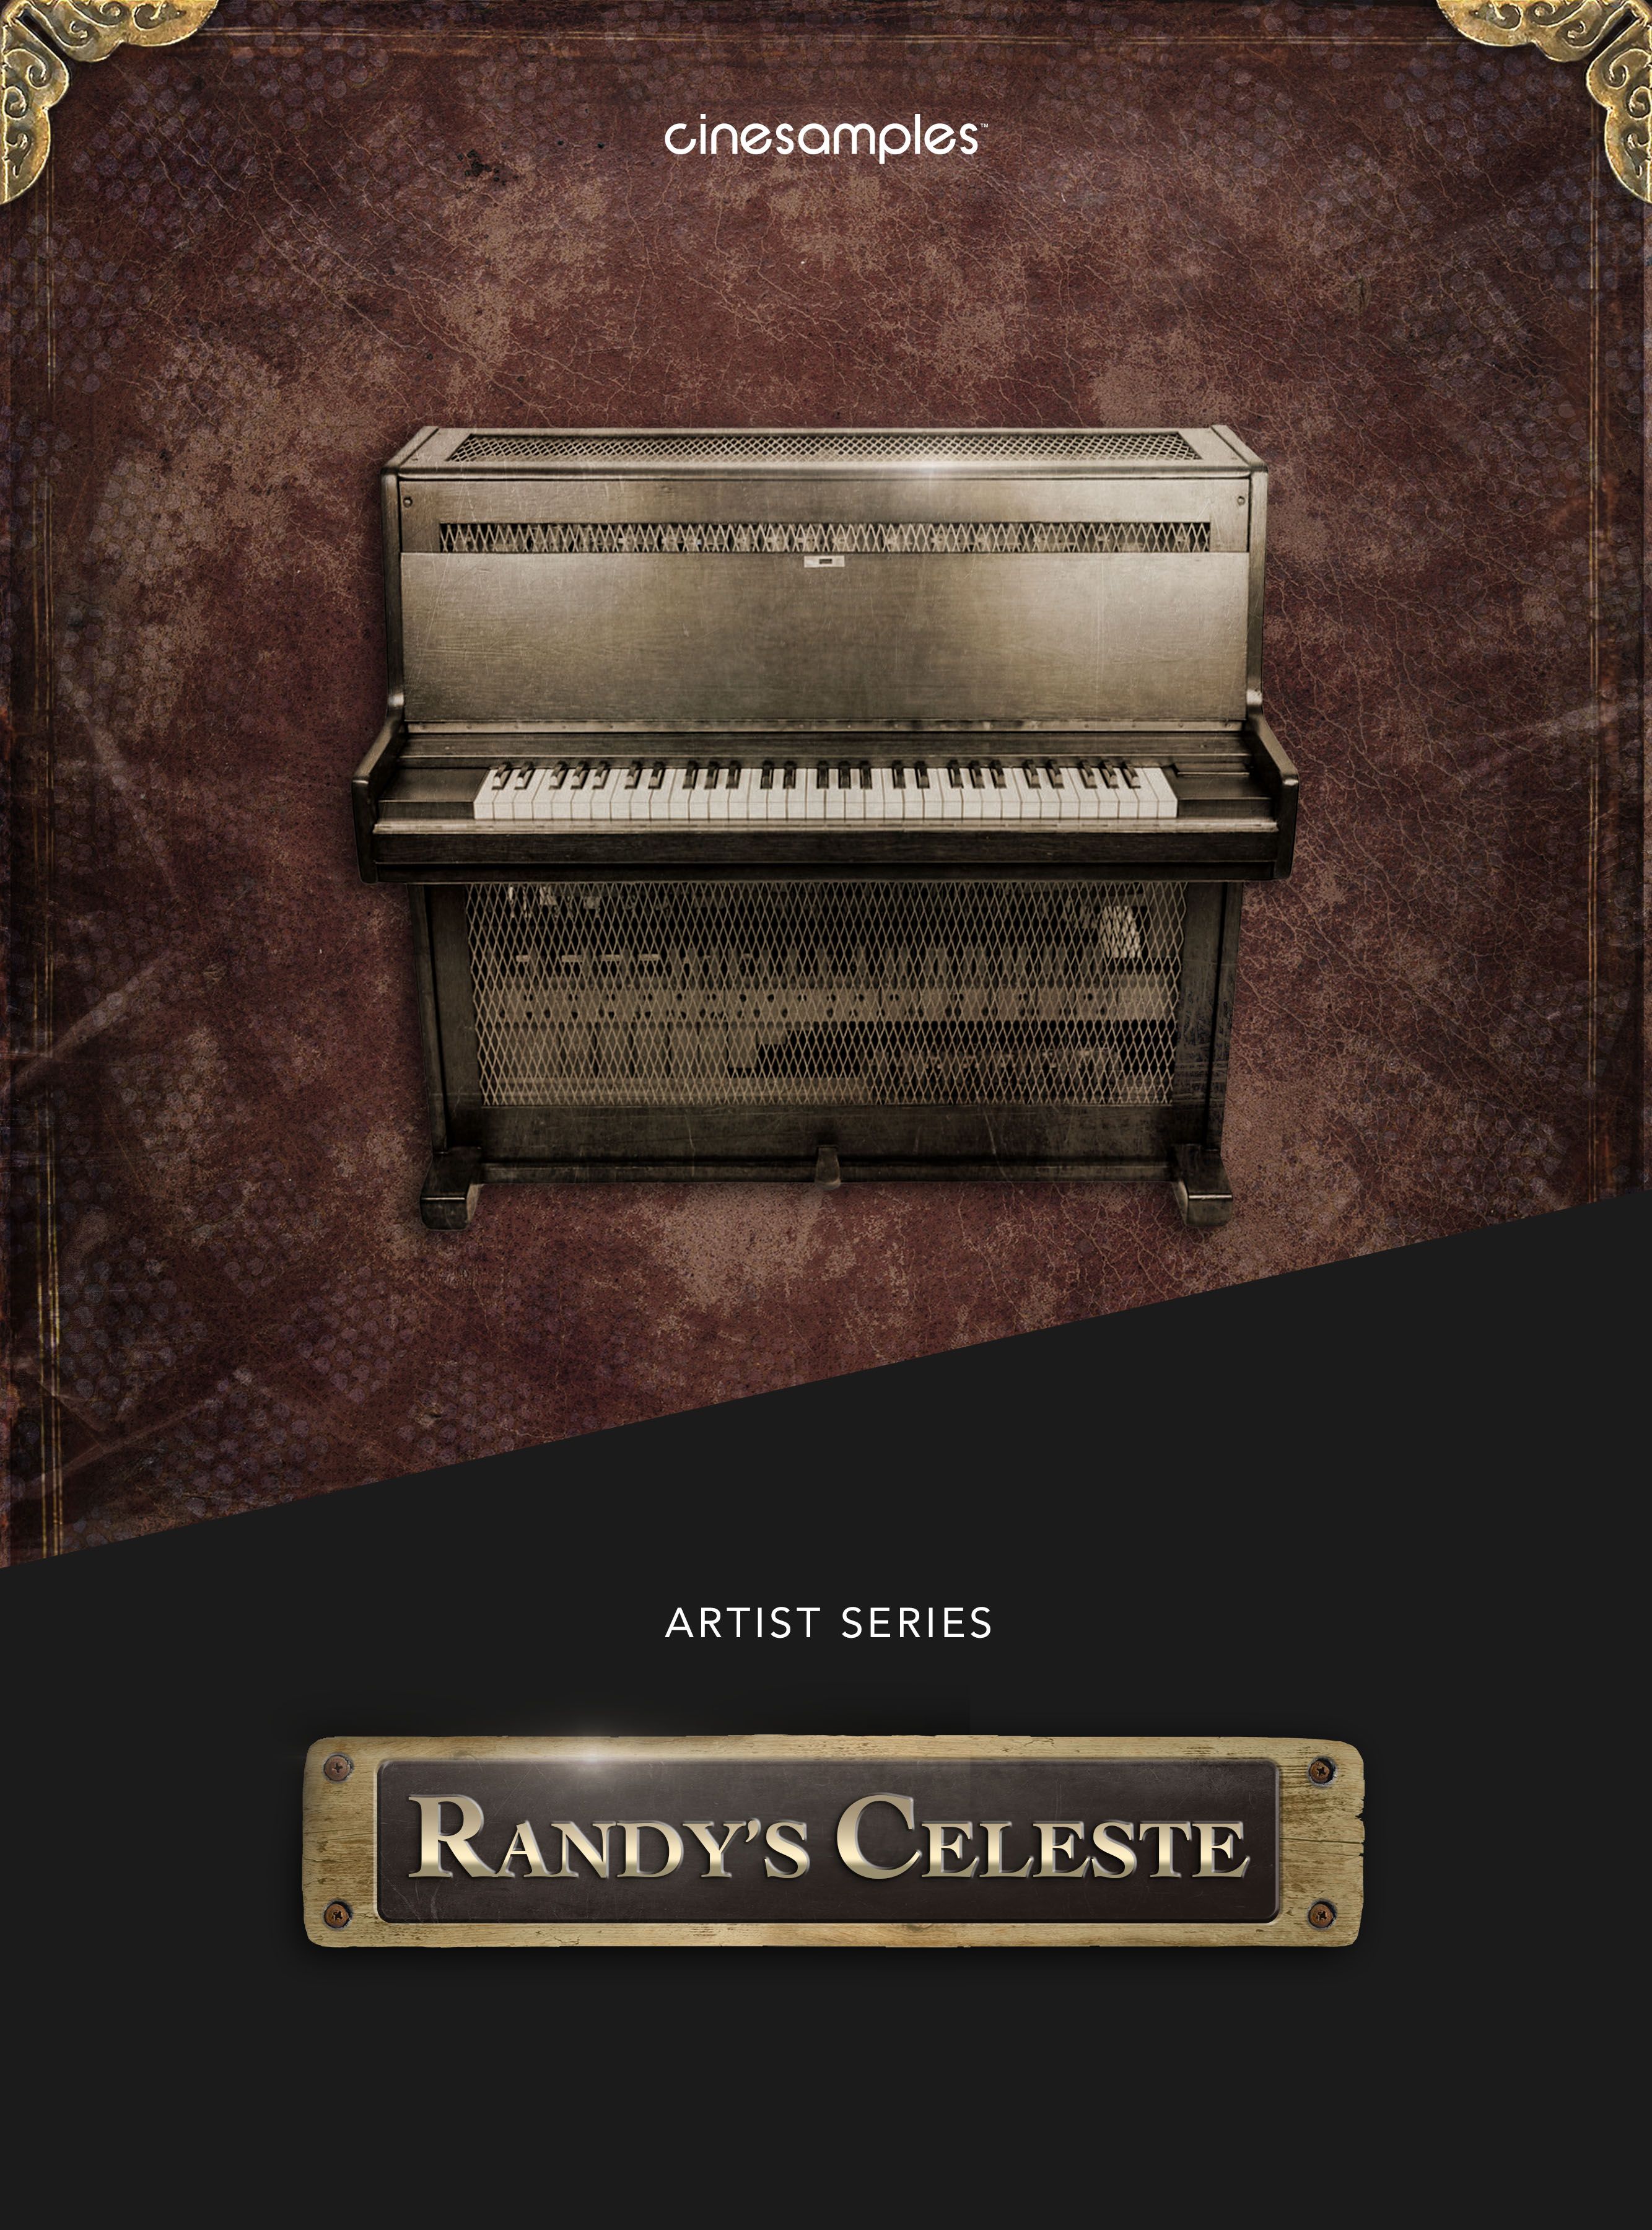 Randy's Celeste